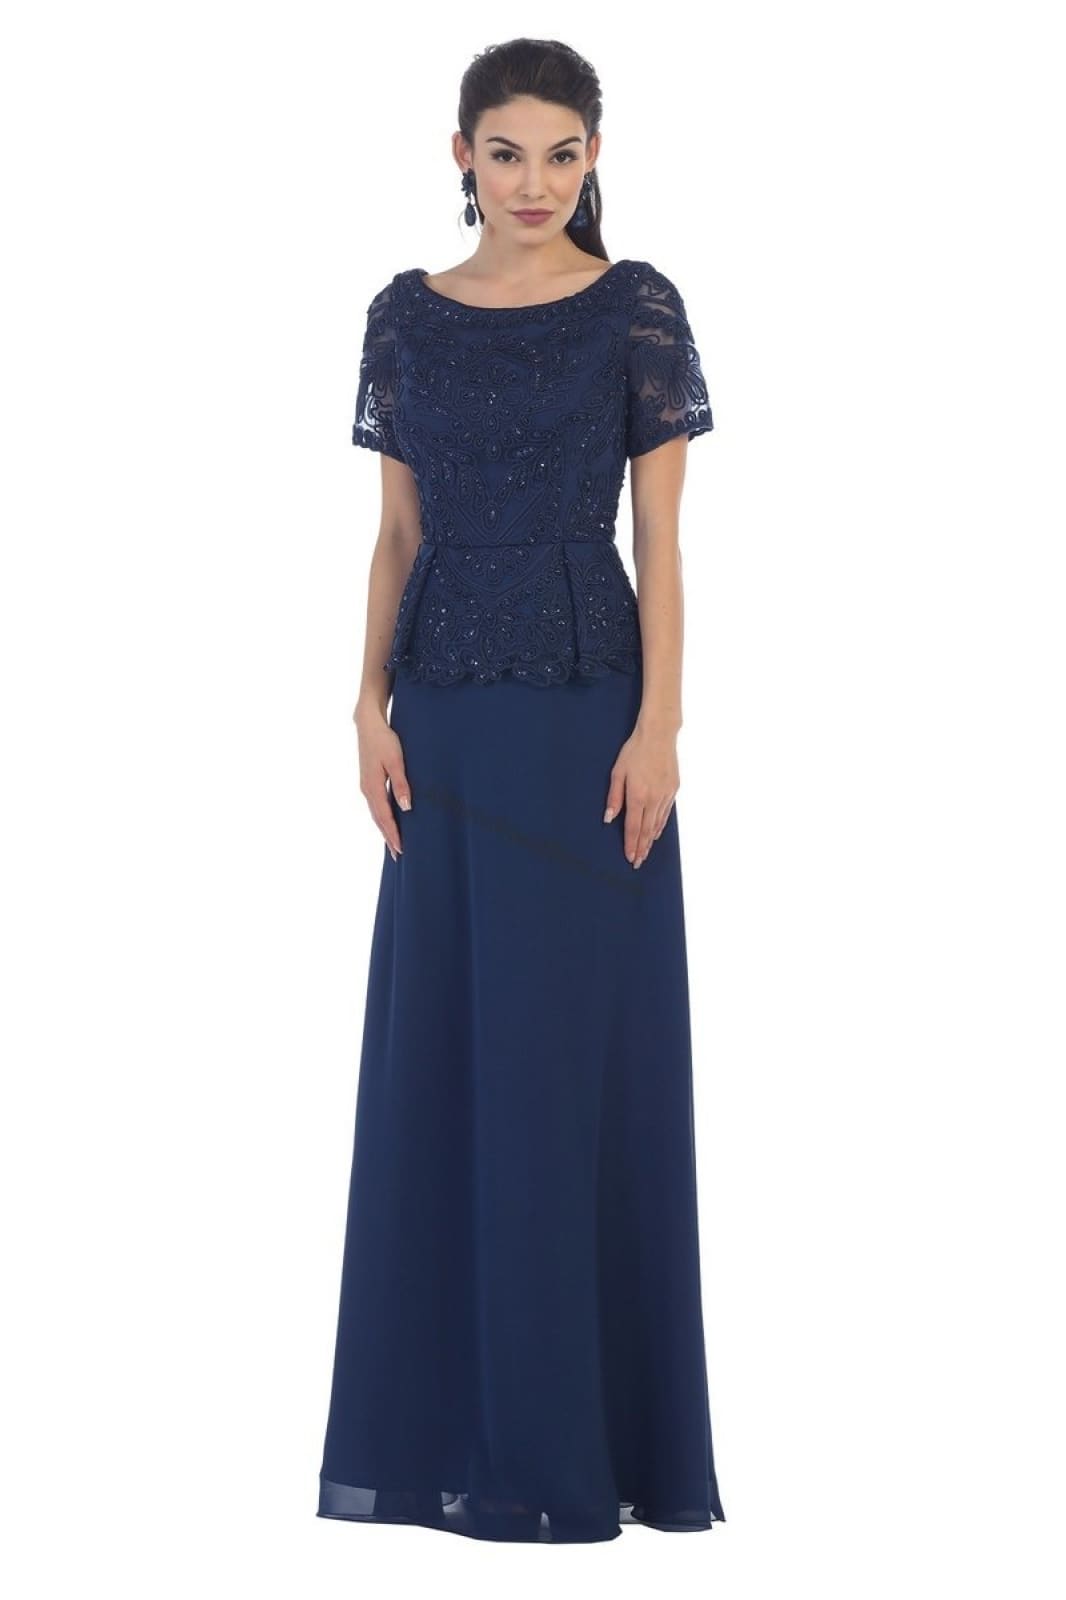 Short sleeve embroidered & rhinestone chiffon dress- LA1427 - Navy - LA Merchandise